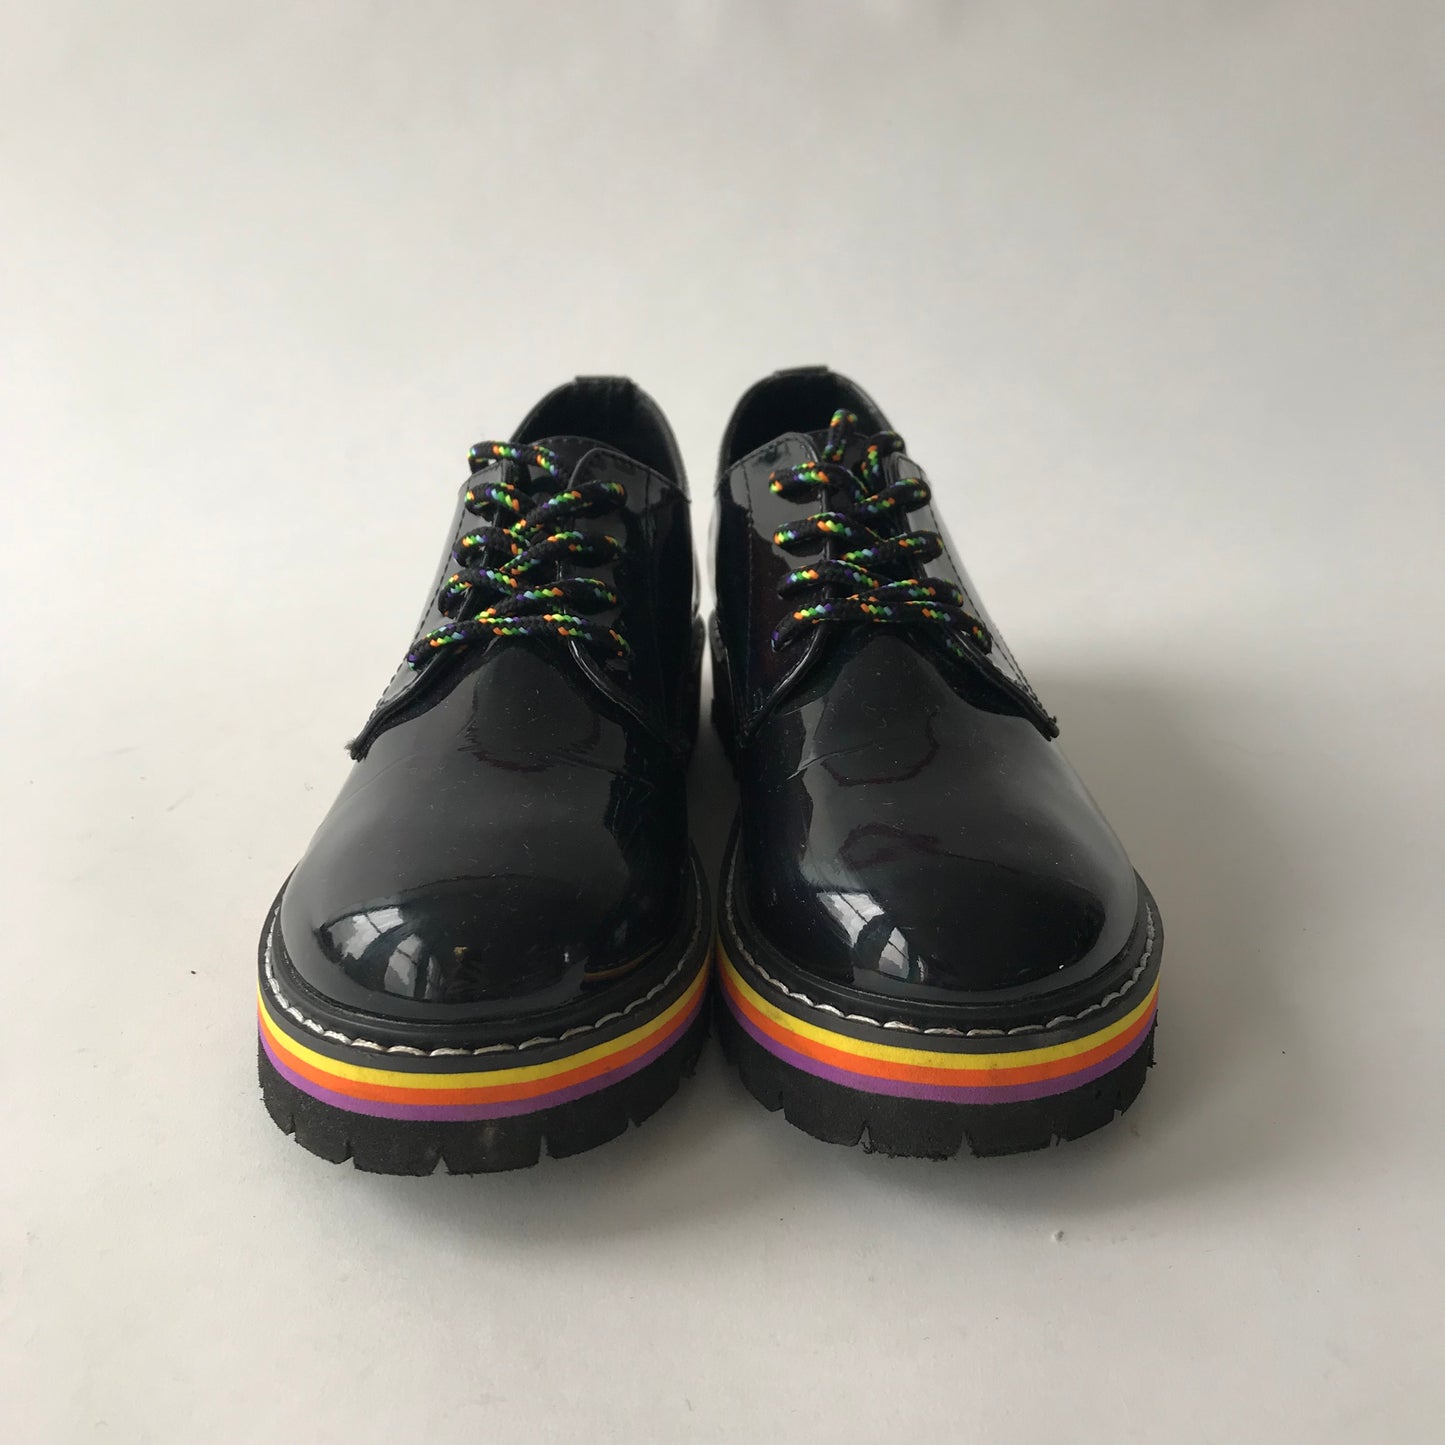 Tu Black Shoes with Colourful Soles Shoe Size 2